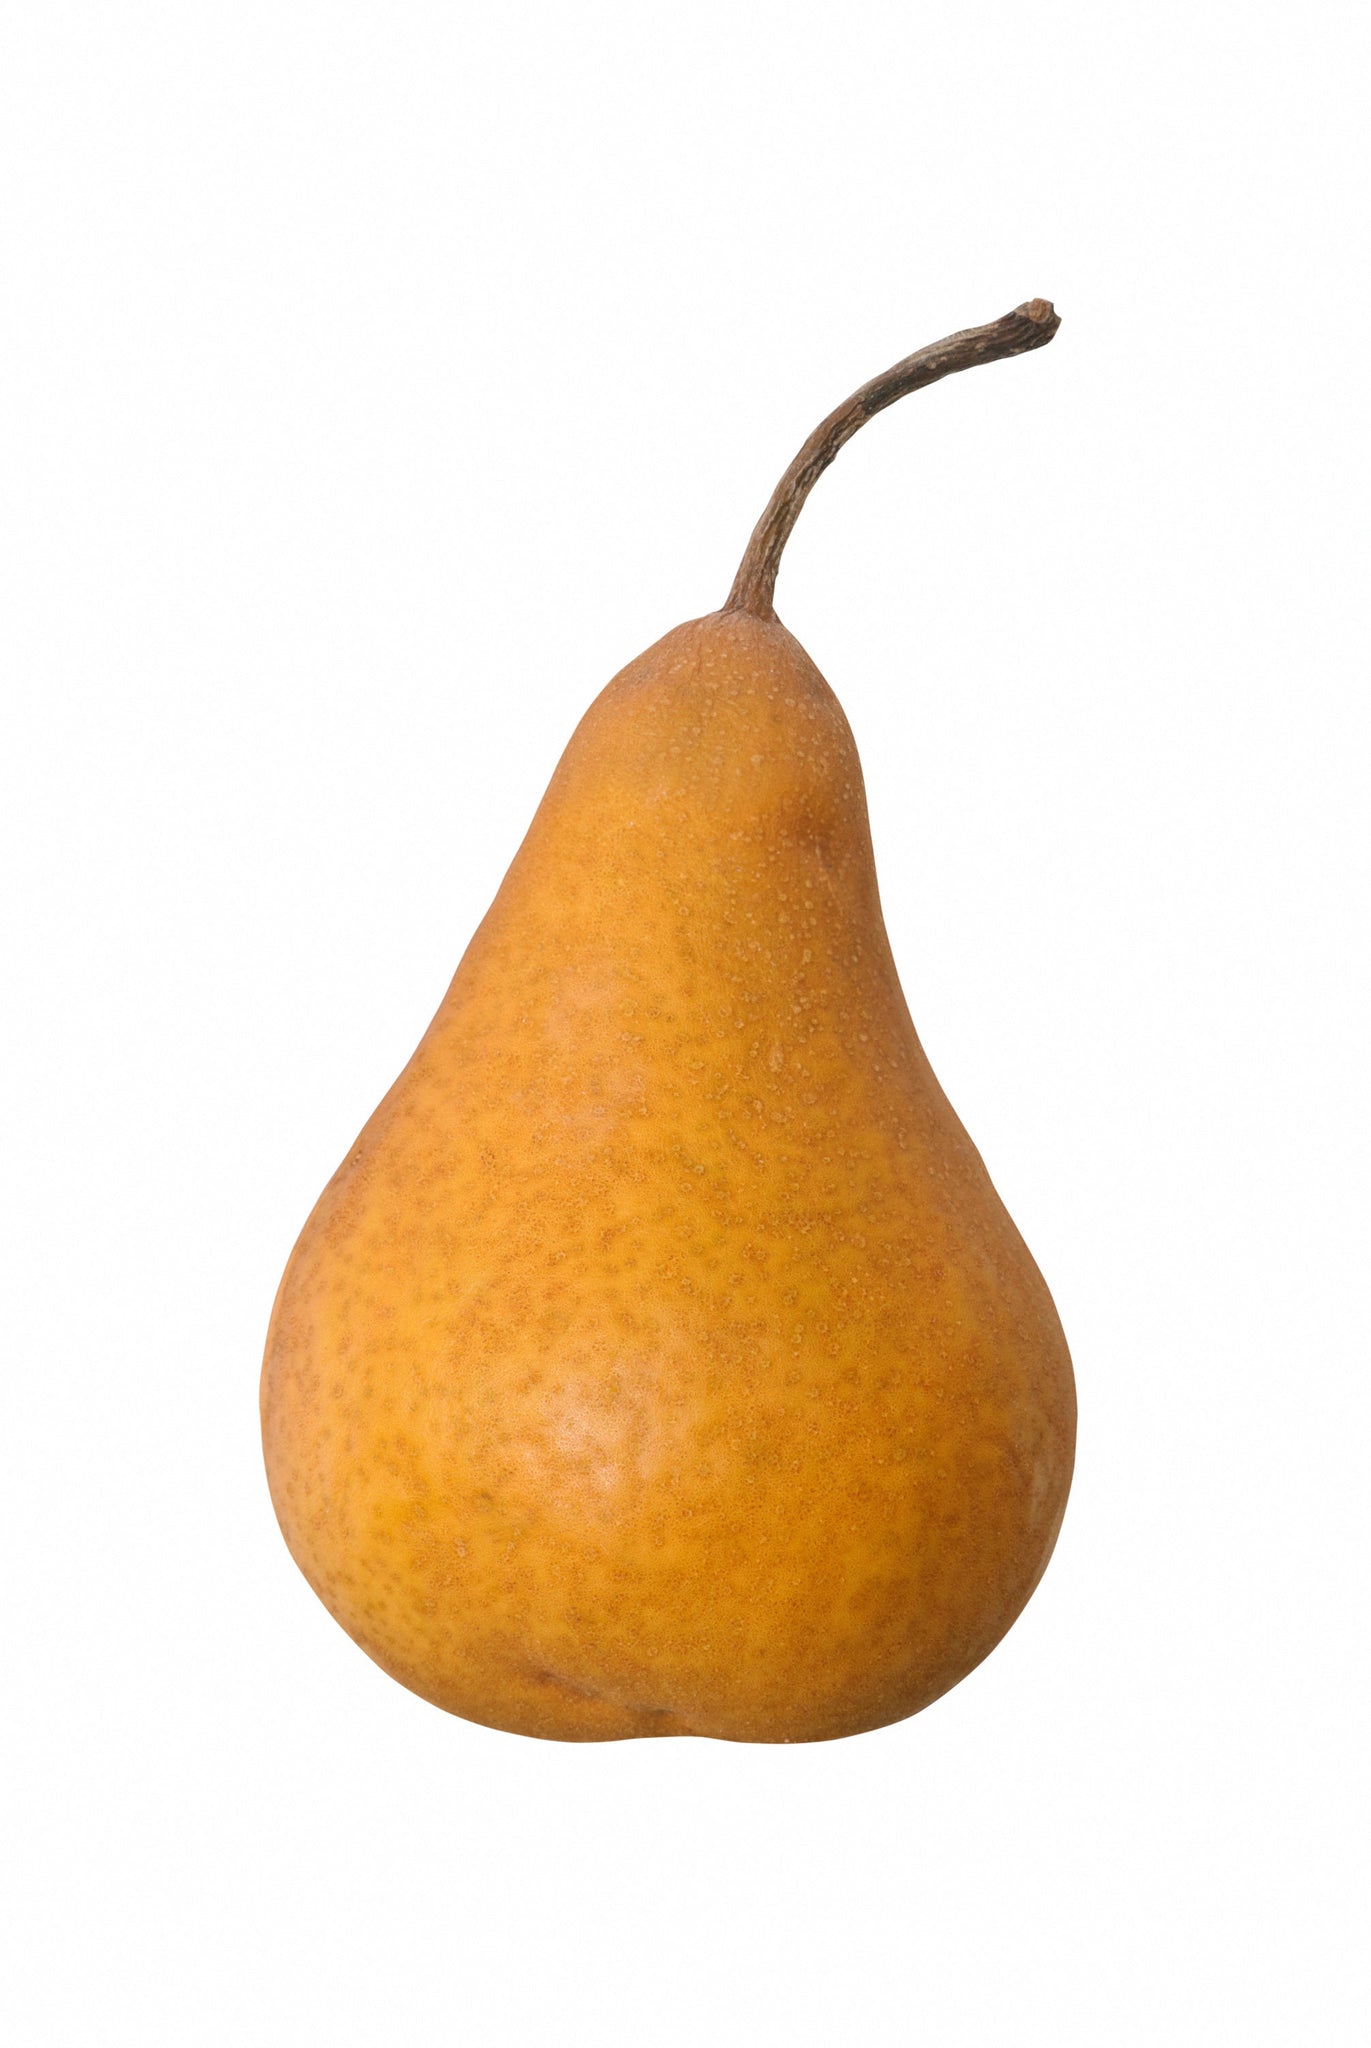 gre>Bosc Pears - per one